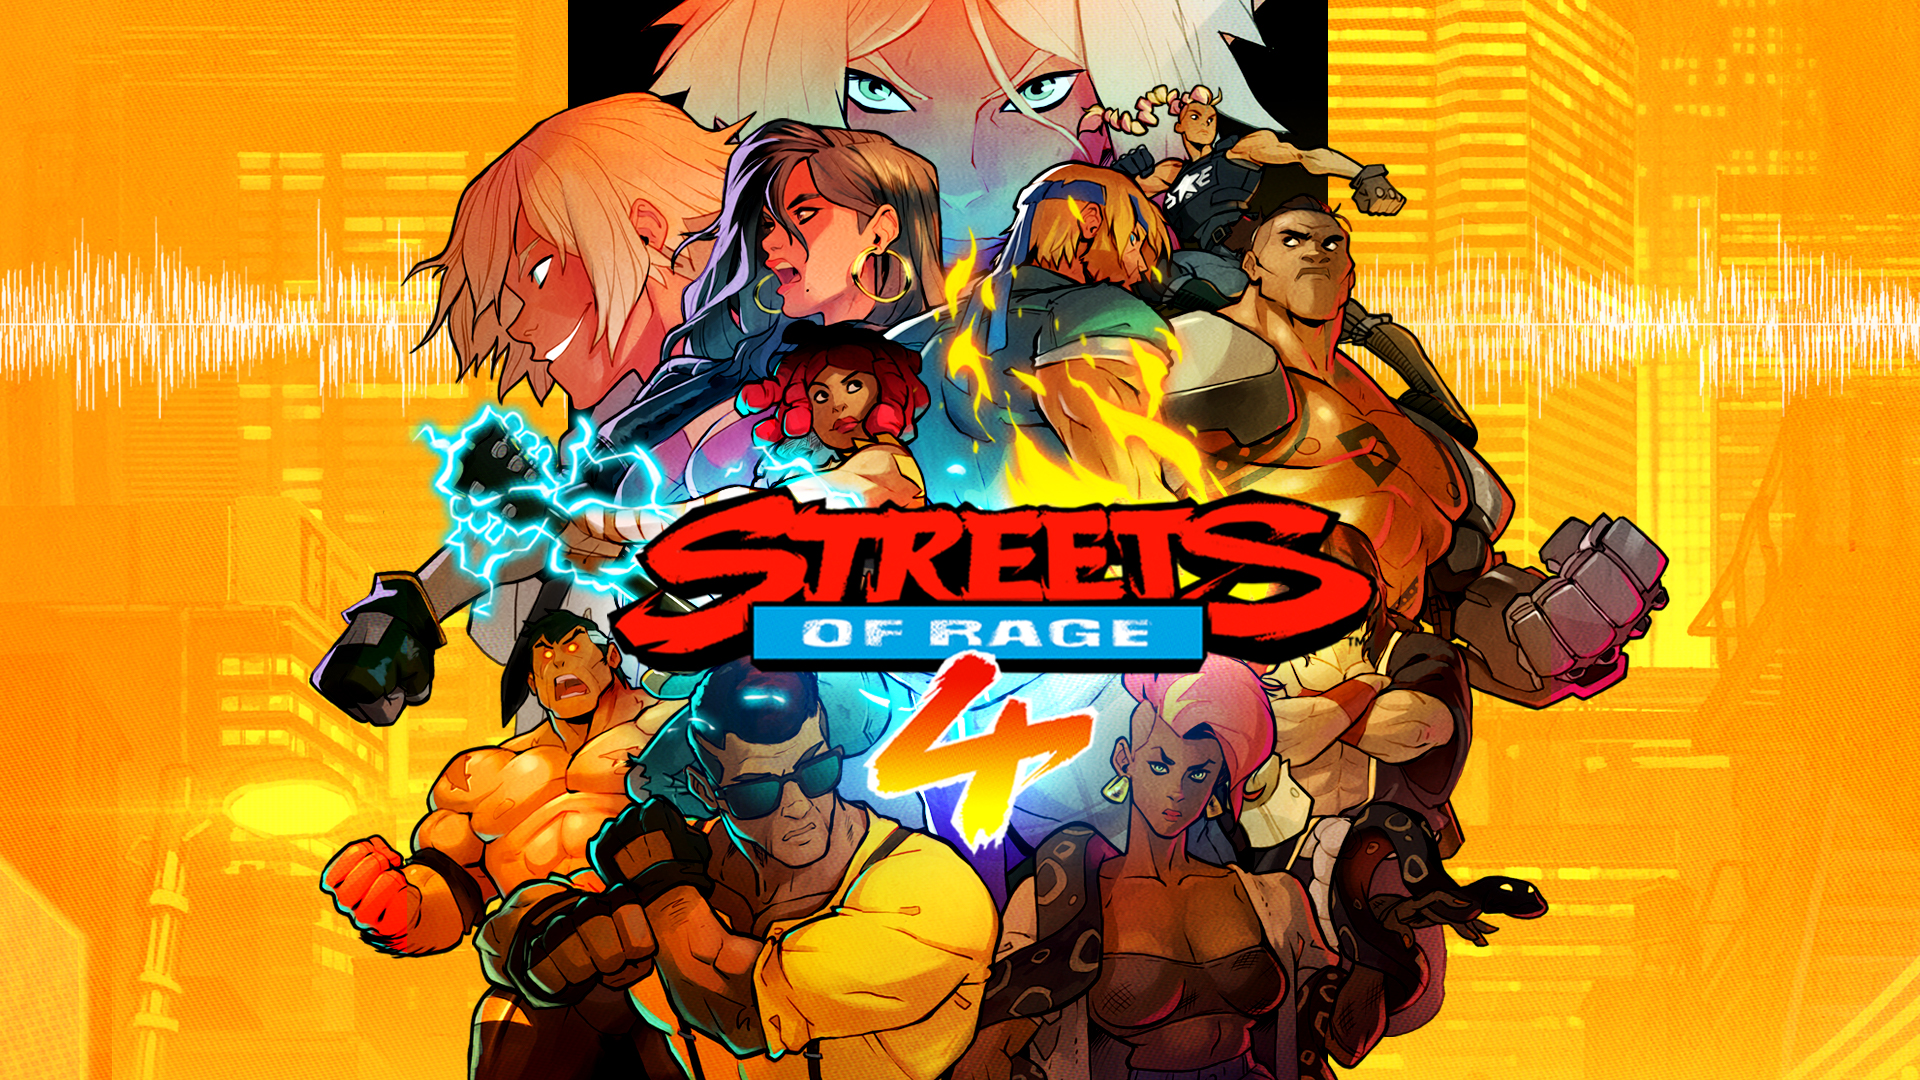 Streets of Rage 4 - Mr. X Nightmare DLC shows up on SteamDB